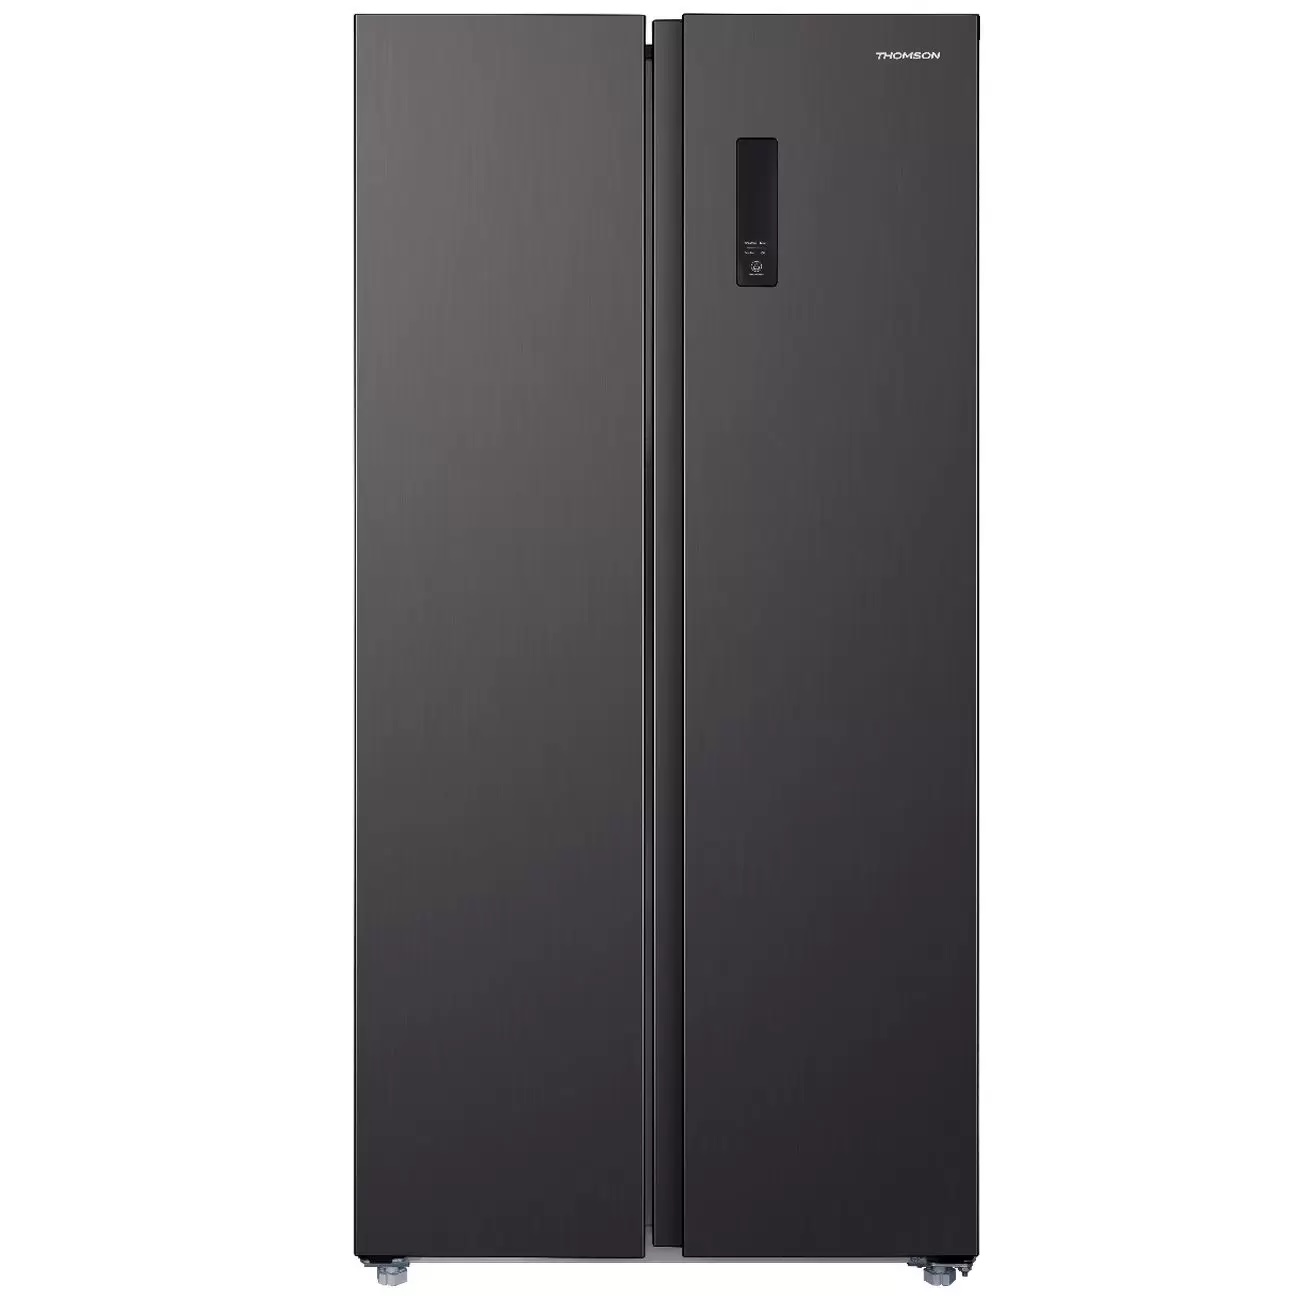 Холодильник Thomson SSC30EI32 серый воздухоувлажнитель thomson ph10m01 серый